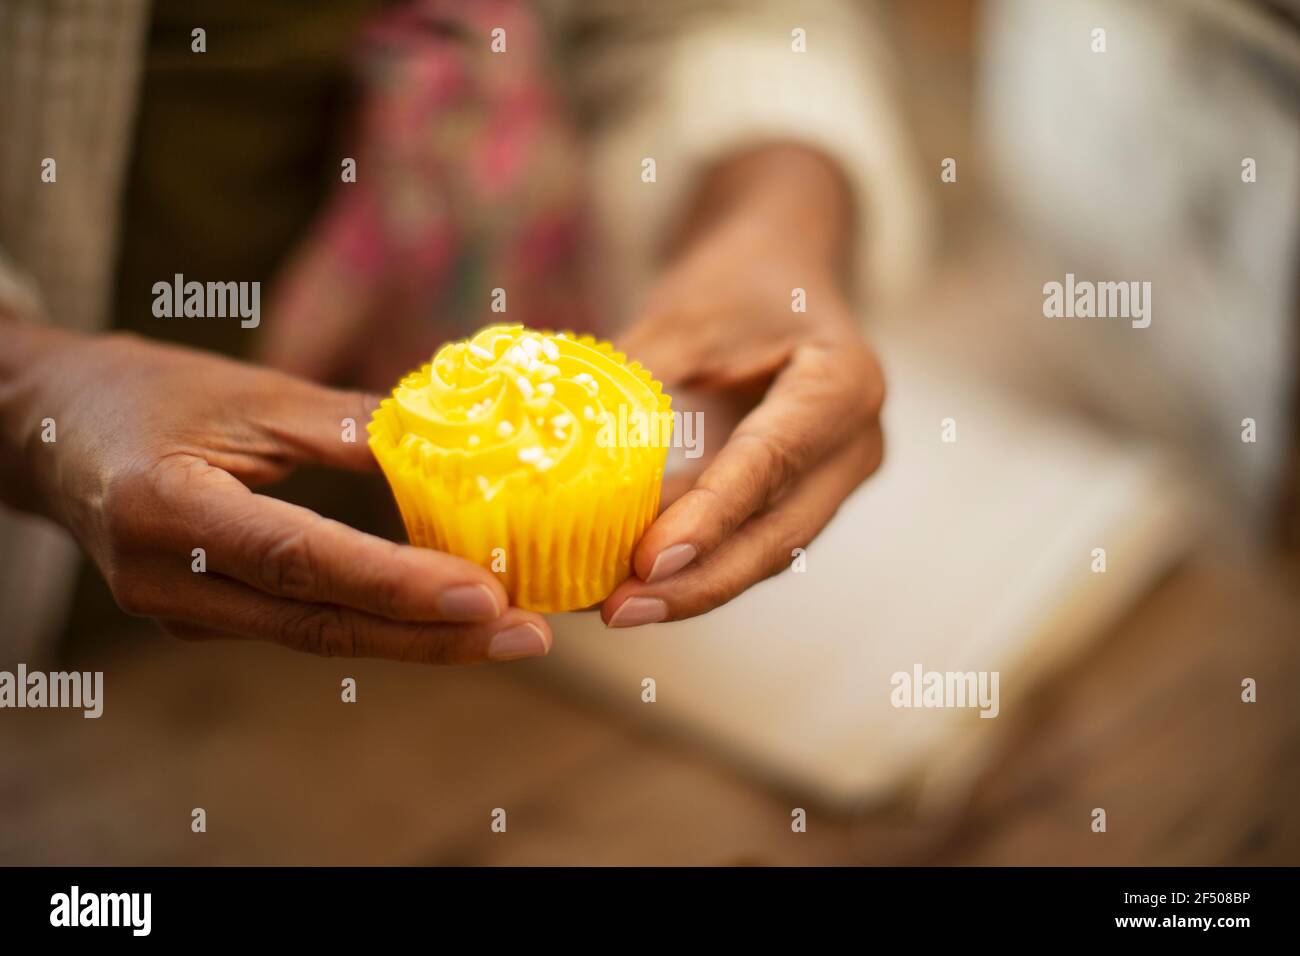 Close up woman holding bright yellow lemon cupcake Stock Photo